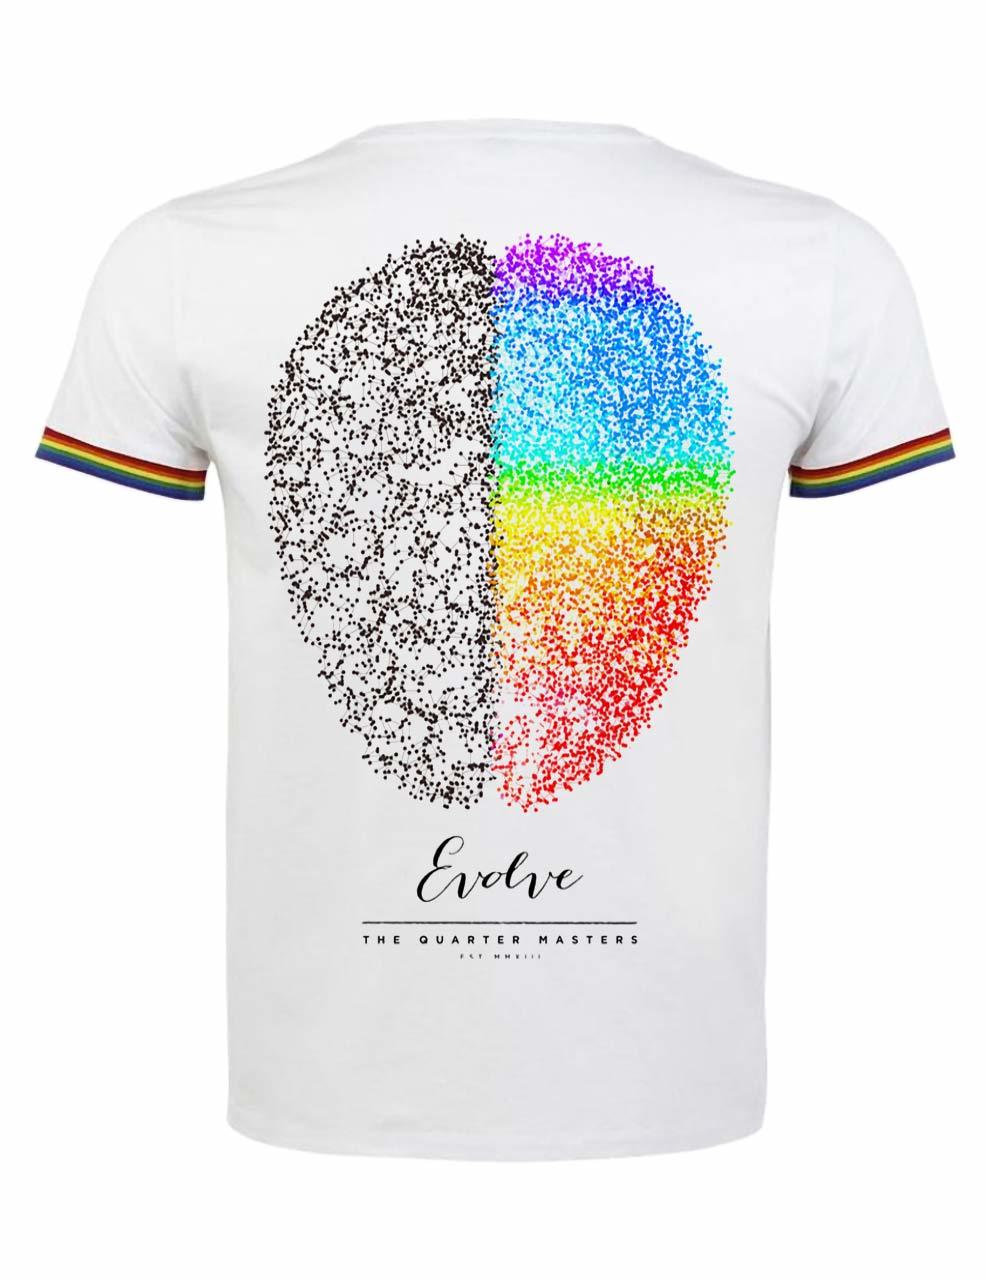 Evolve T-shirt with back print of a rainbow brain